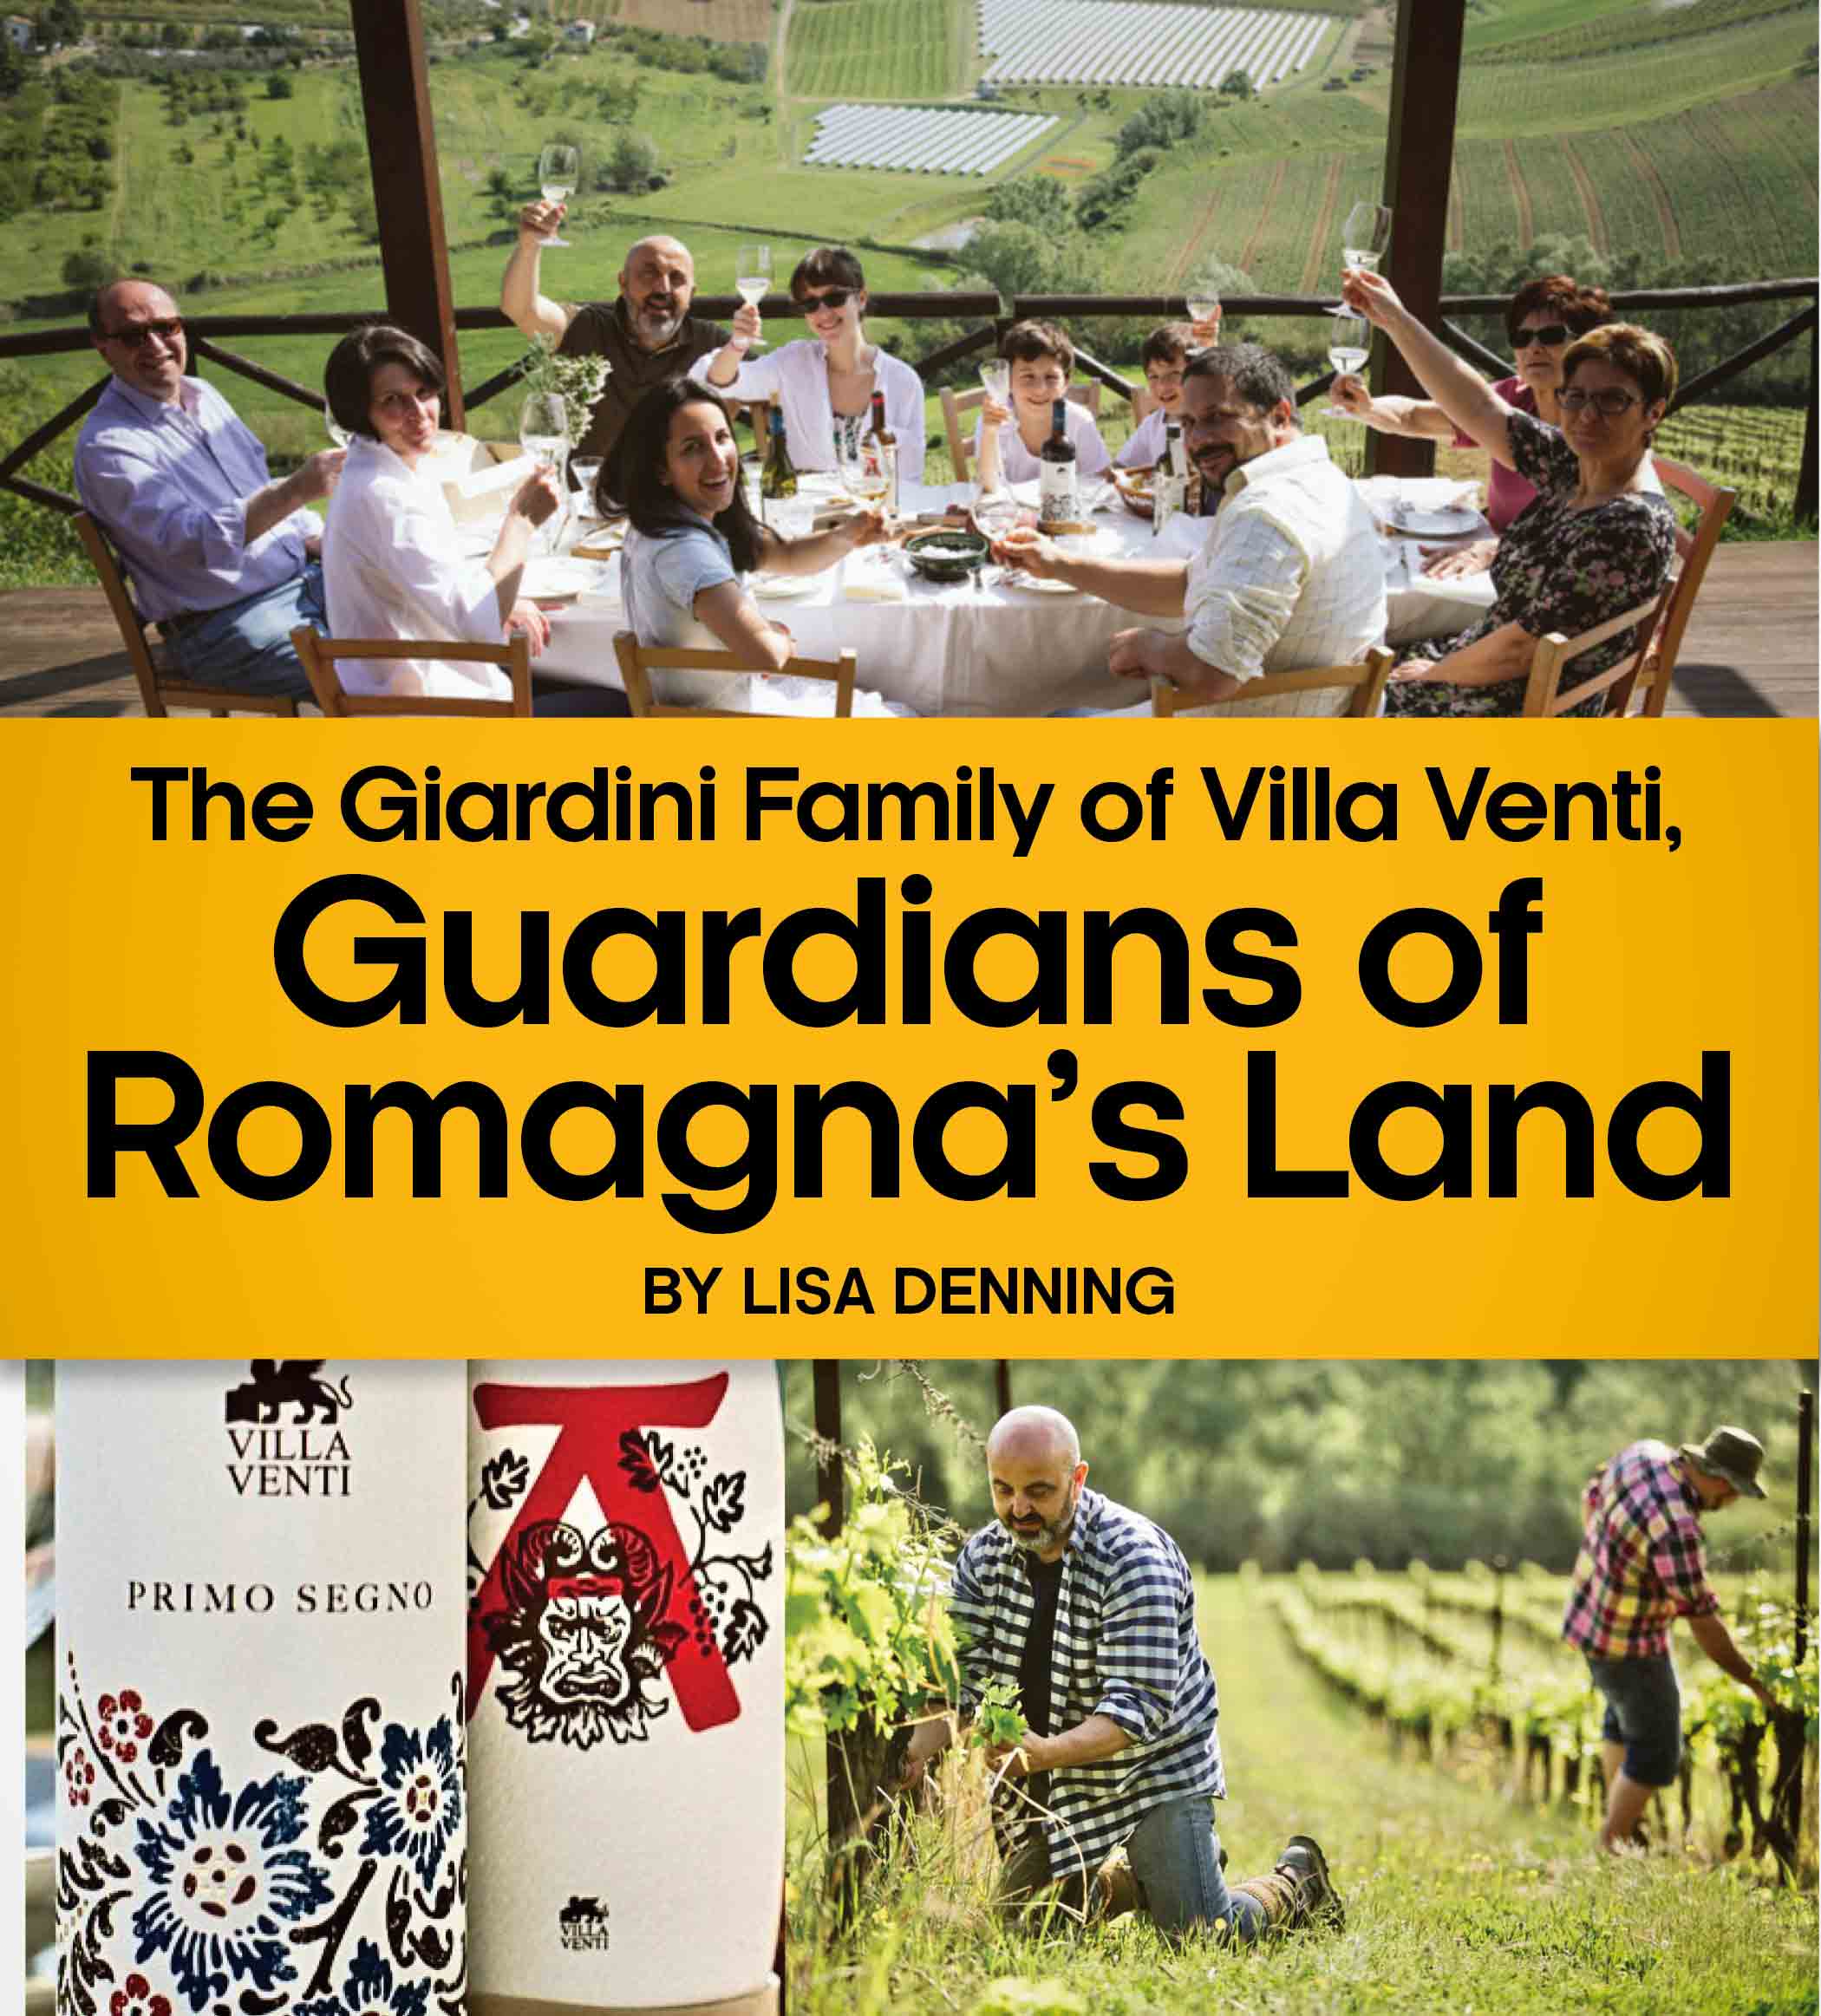 The Giardini Family of Villa Venti, Guardians of Romagna's Land